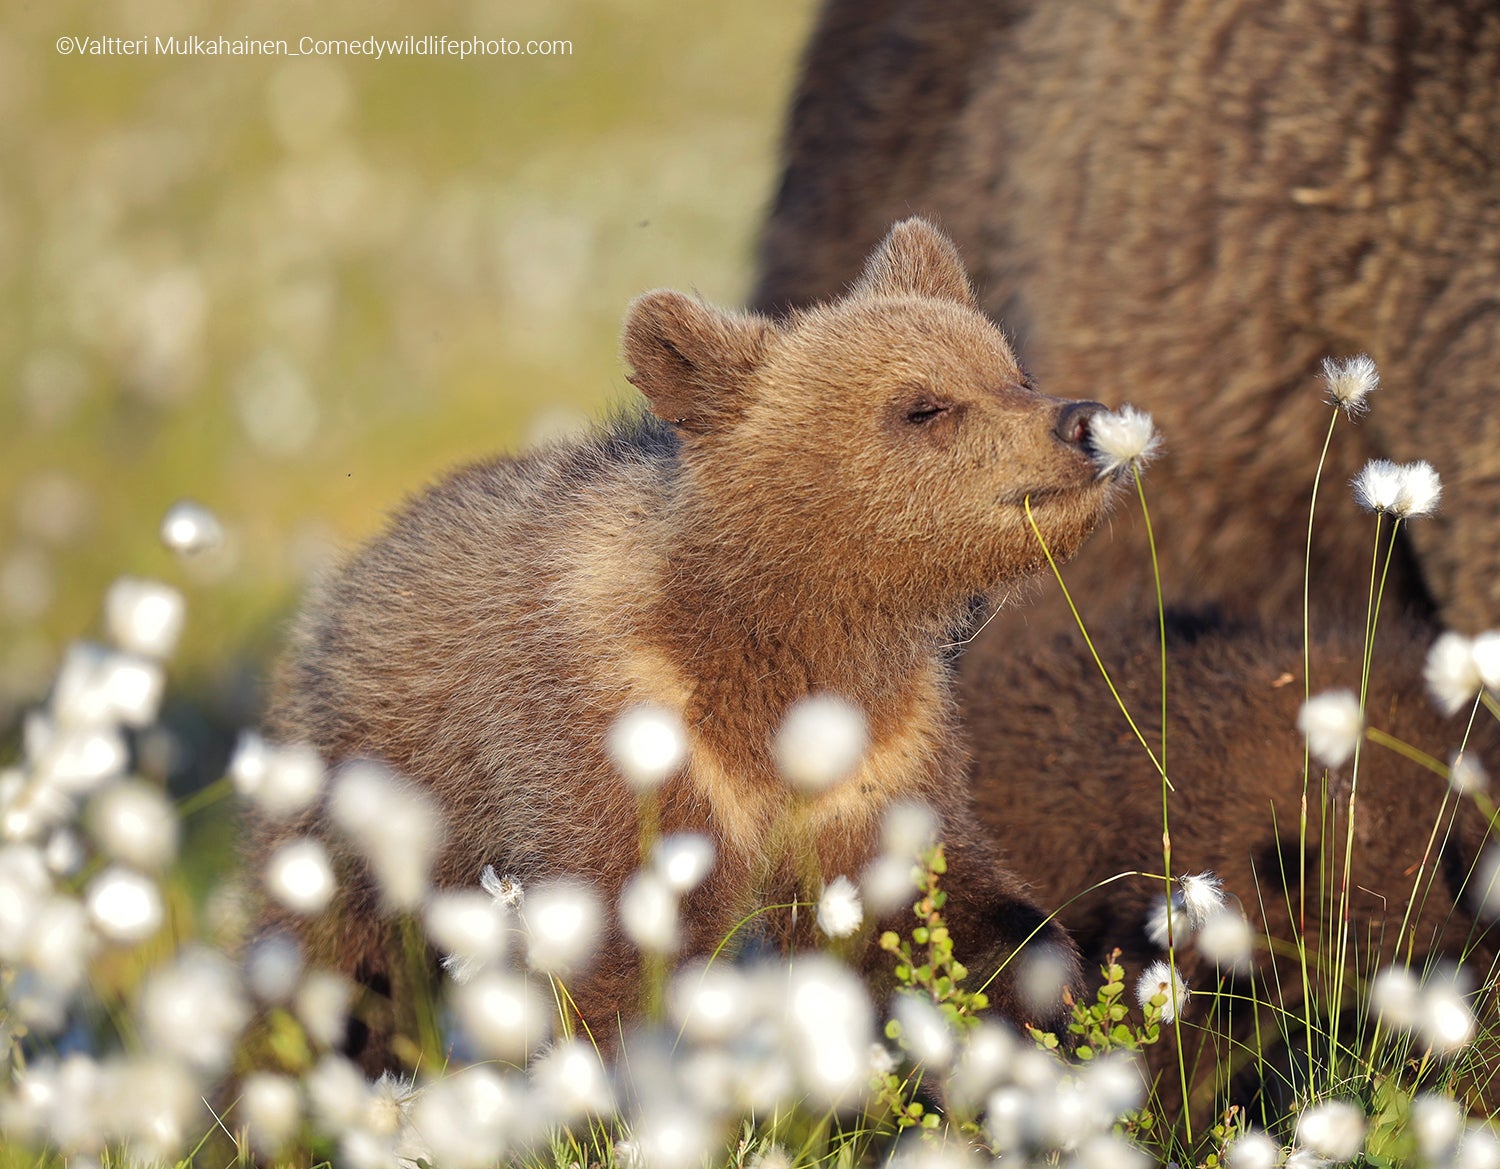 A brown bear sniffs some flowers. (Photo: © Valtteri Mulkahainen / Comedywildlifephoto.com.)